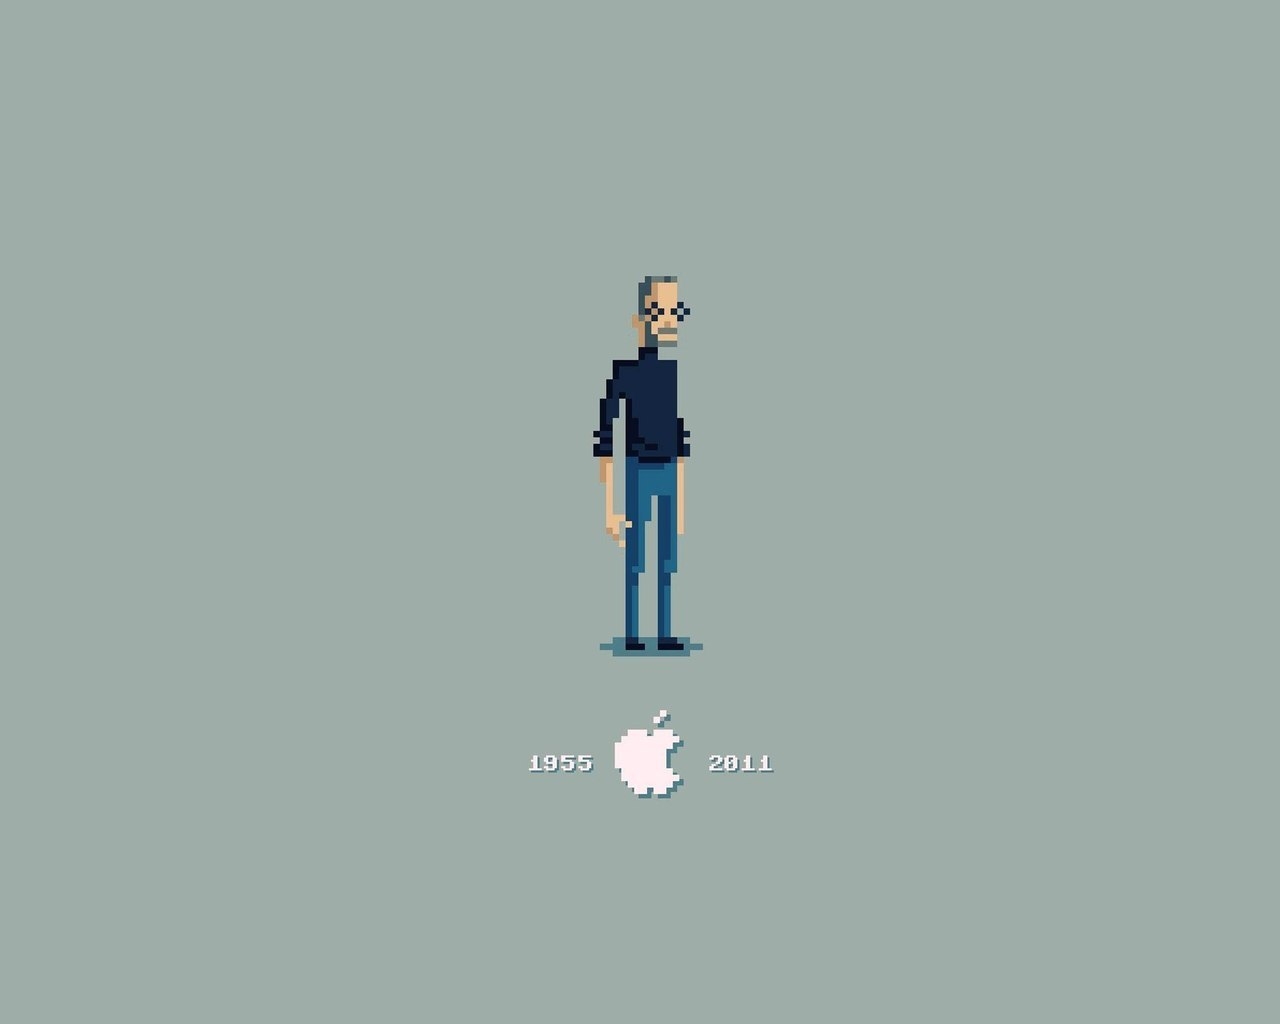 Steve Jobs Pixelated for 1280 x 1024 resolution